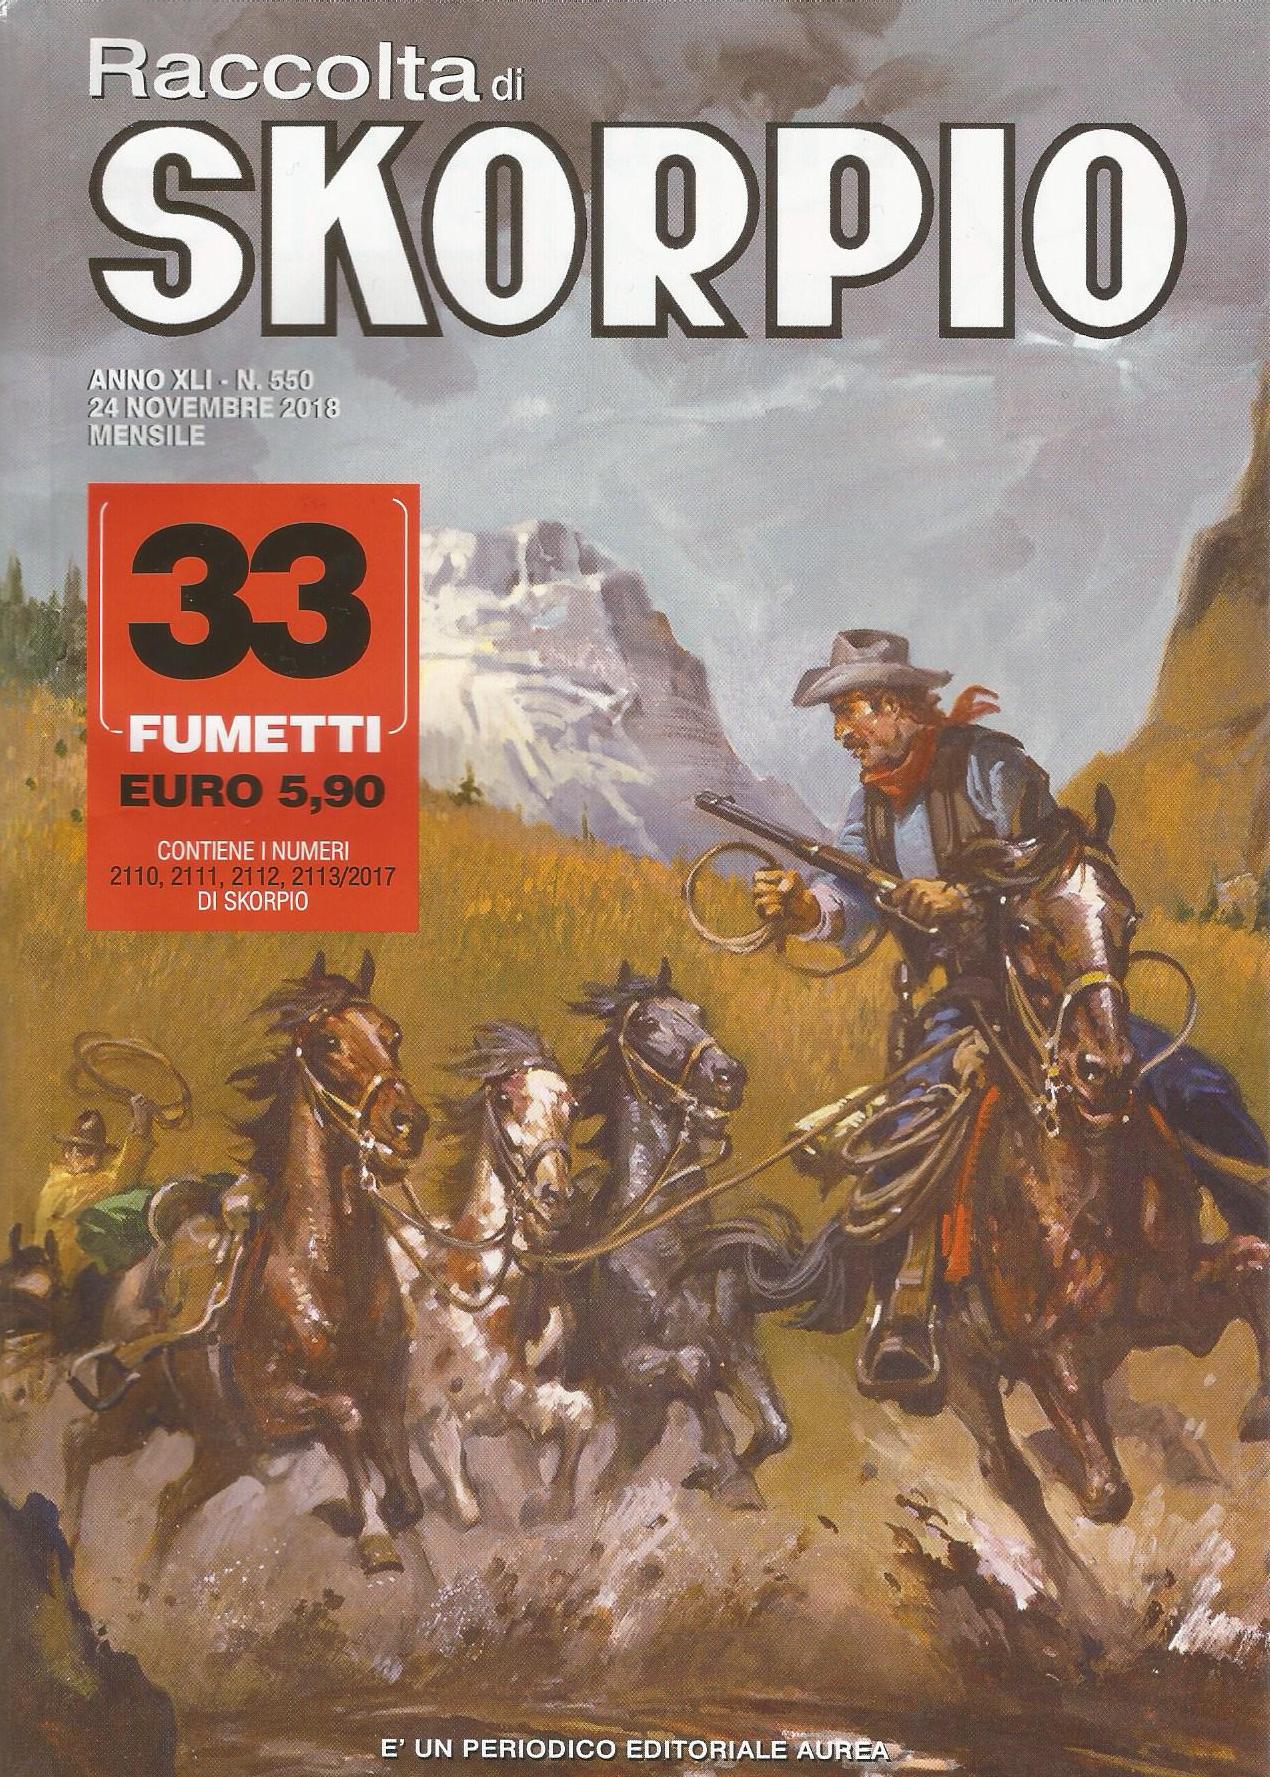 Raccolta Di Skorpio N.550 (Editoriale Aurea) - 2018